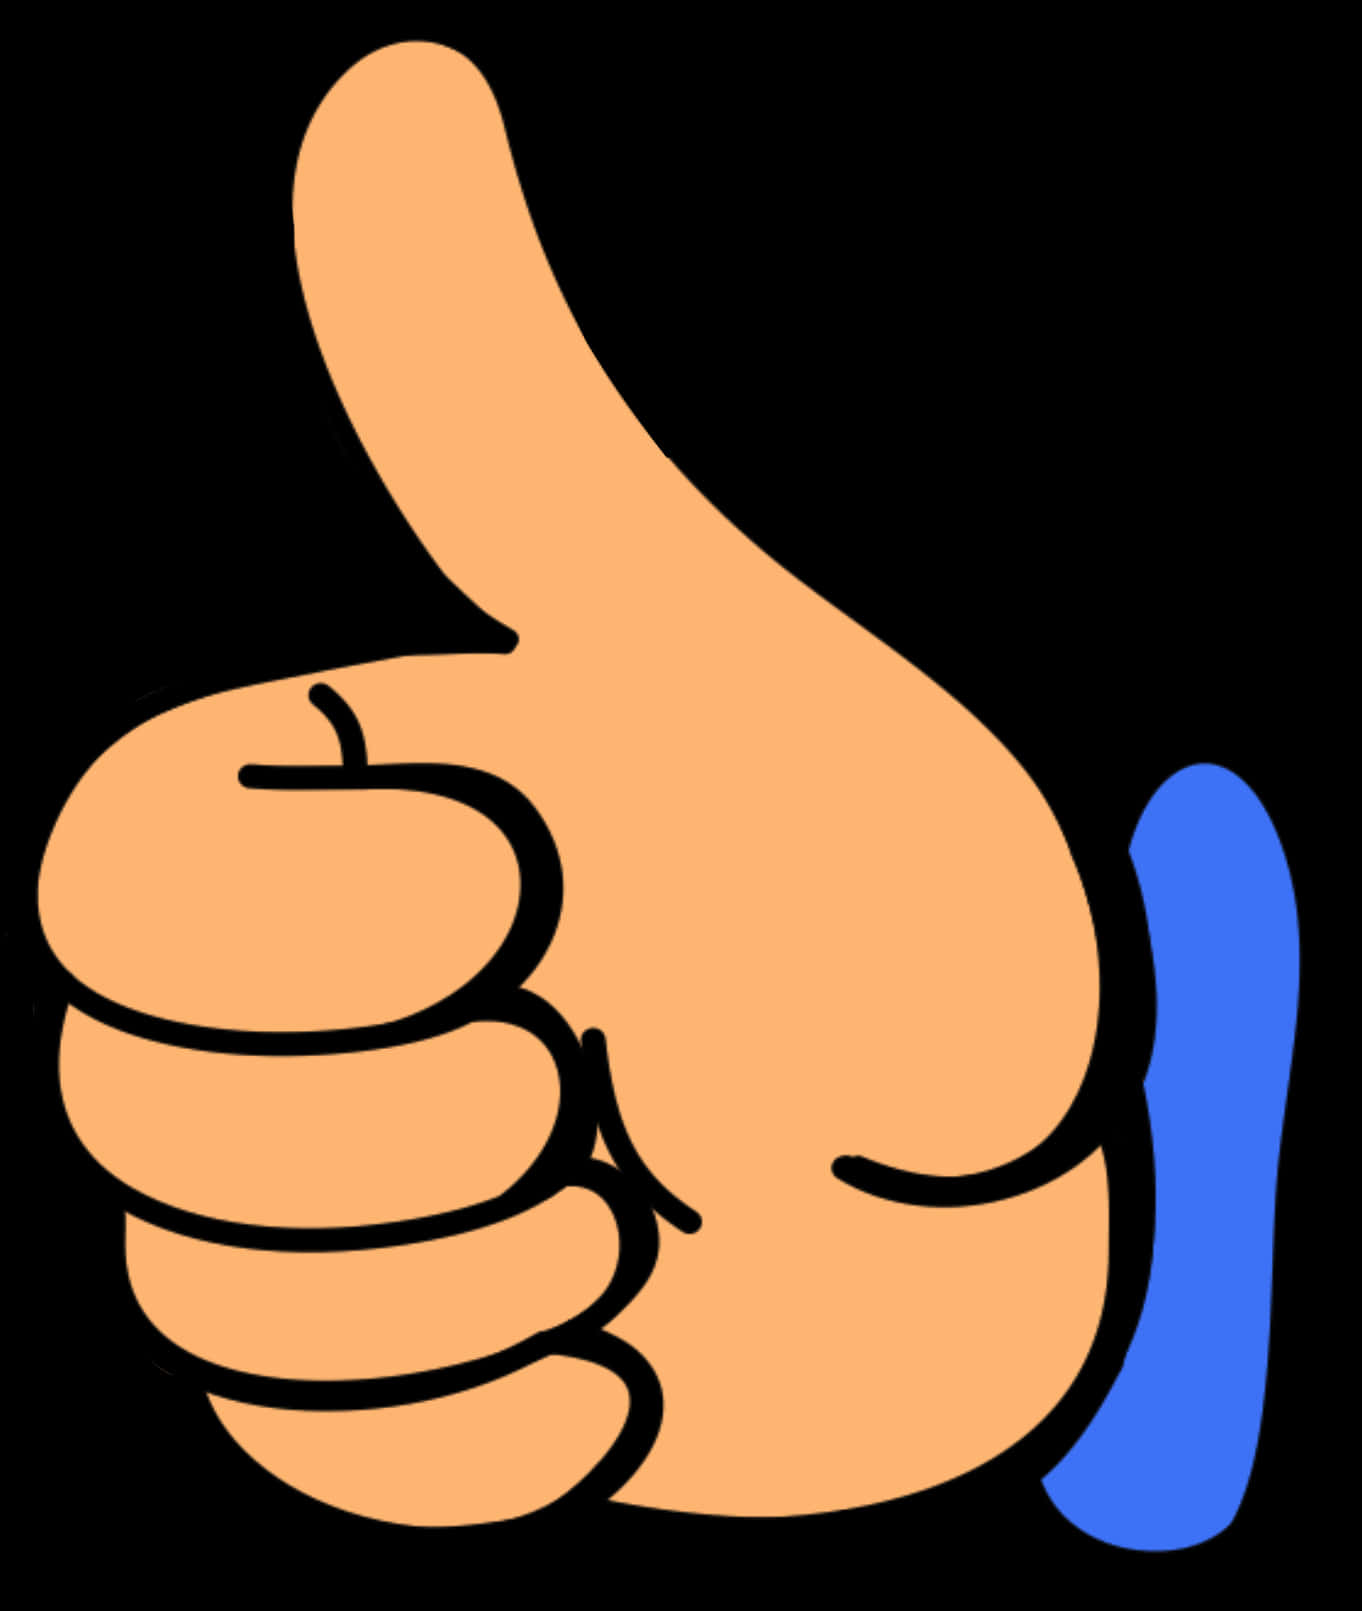 Thumbs Up Emoji With Blue Shadow